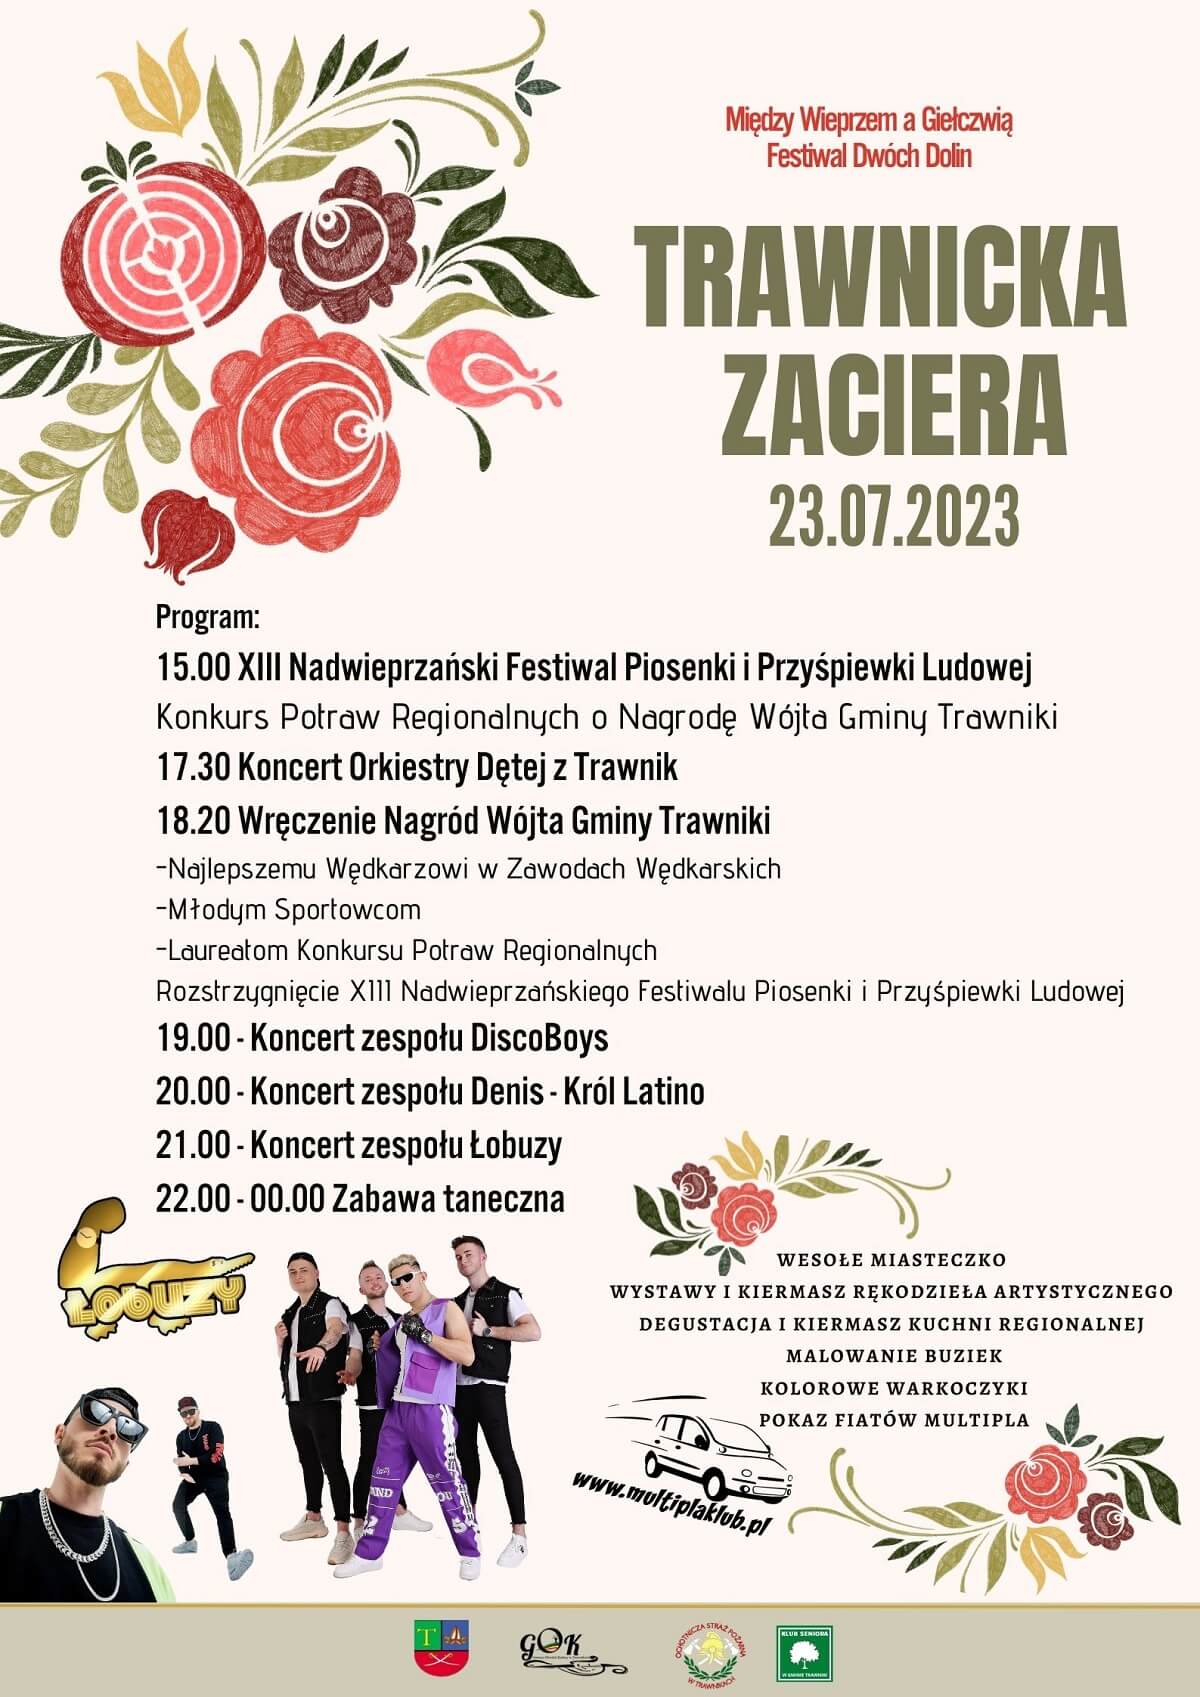 Trawnicka Zaciera 2023 - program, plakat